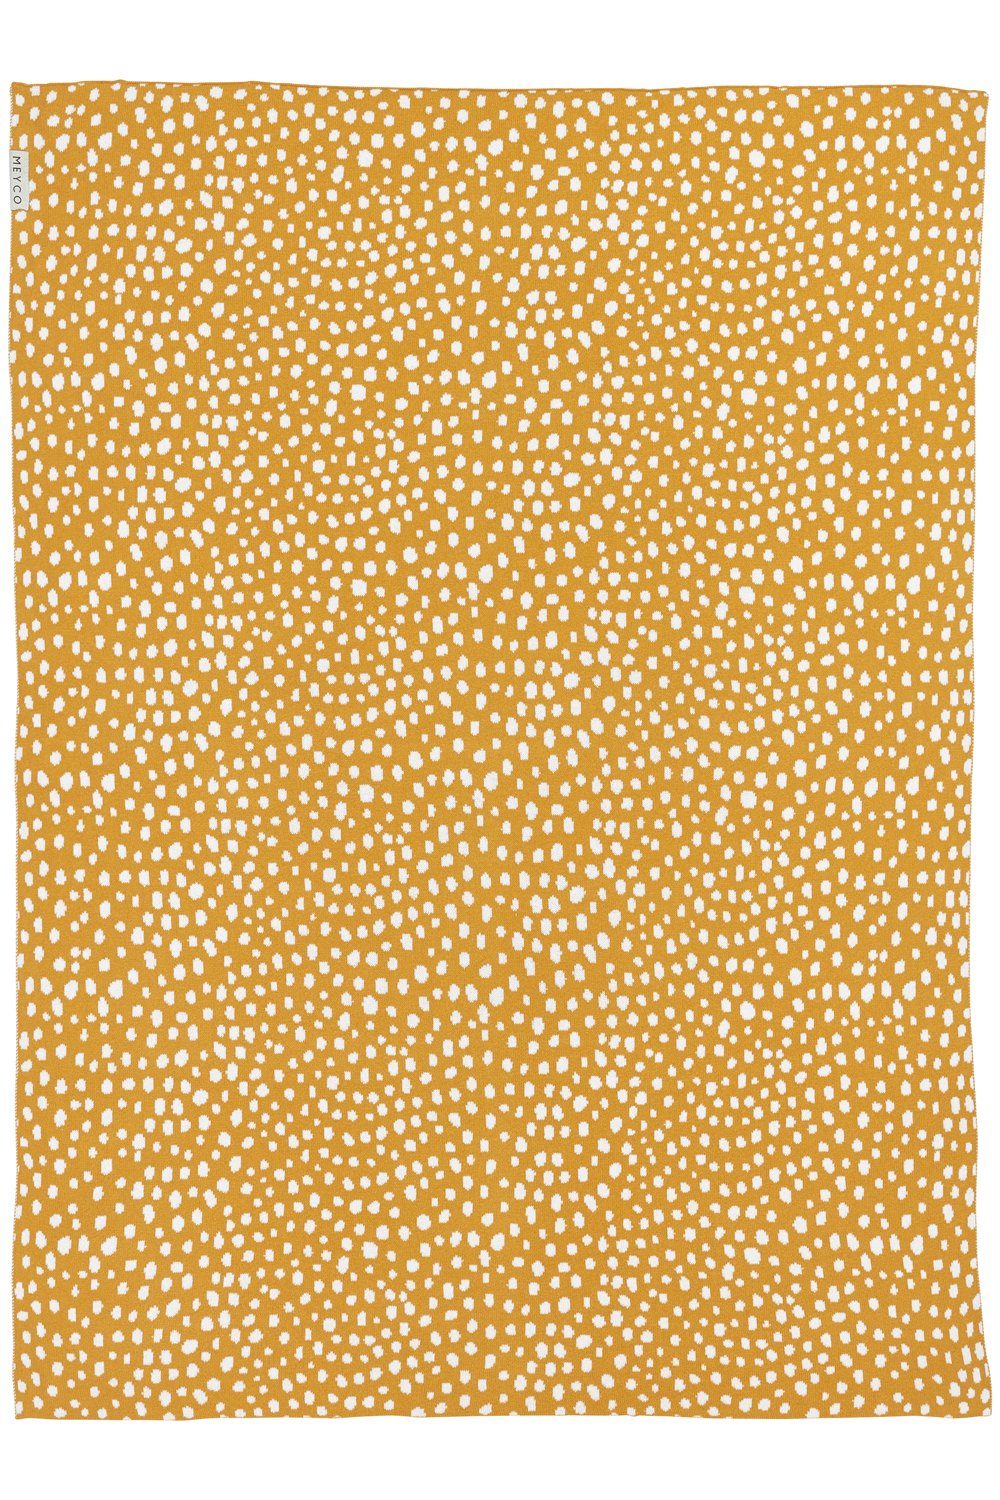 Babydecke Cheetah Honey Baby, Meyco Gold, 75x100cm